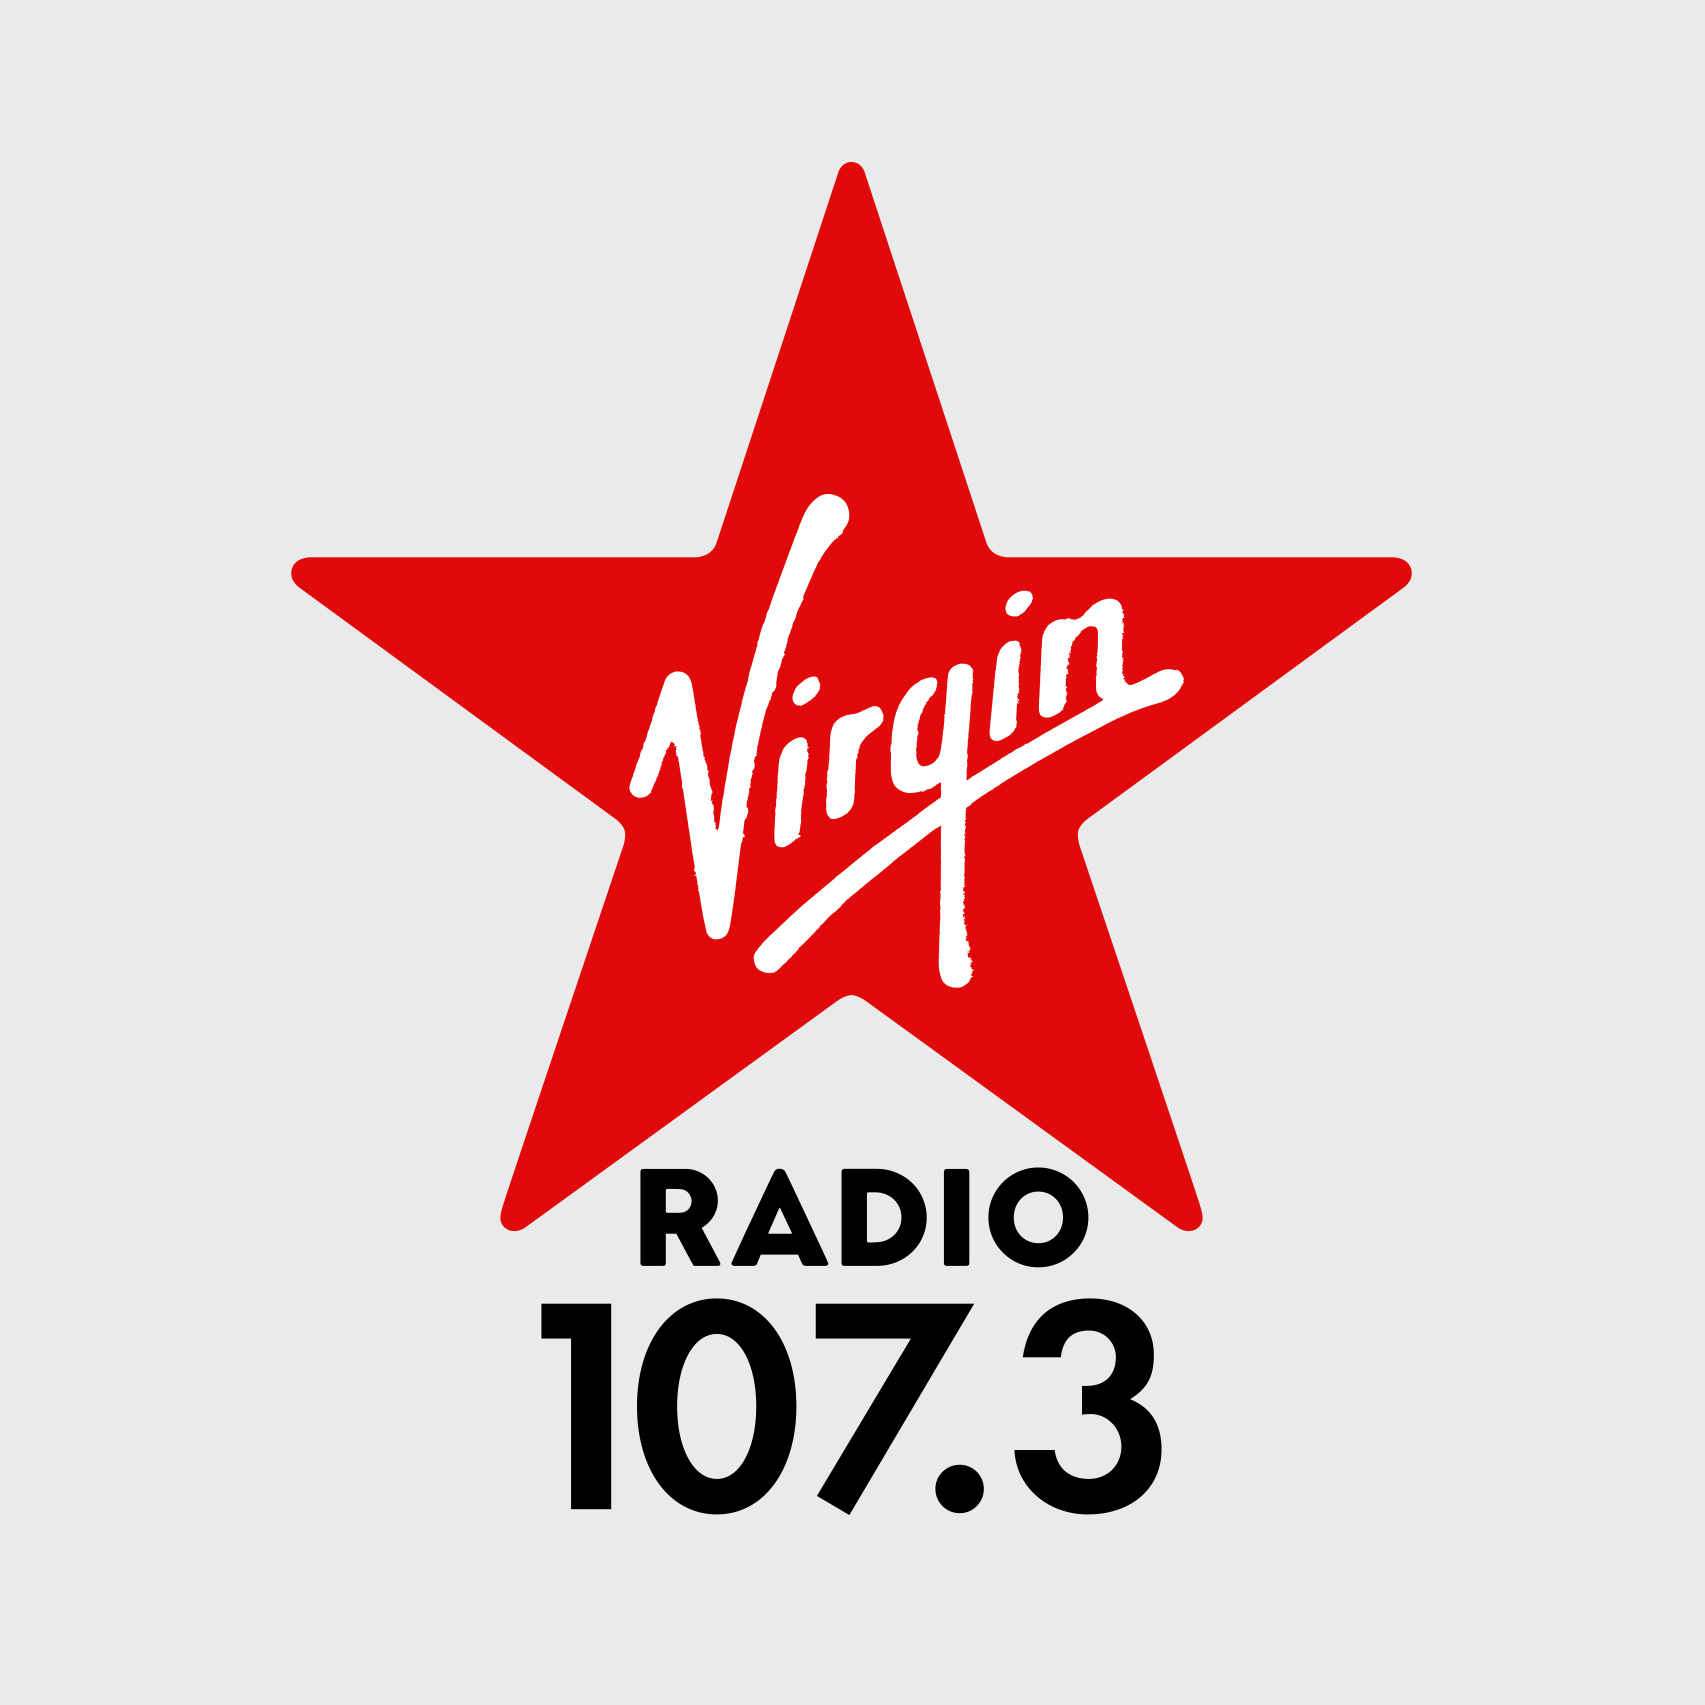 Virgin Radio logo